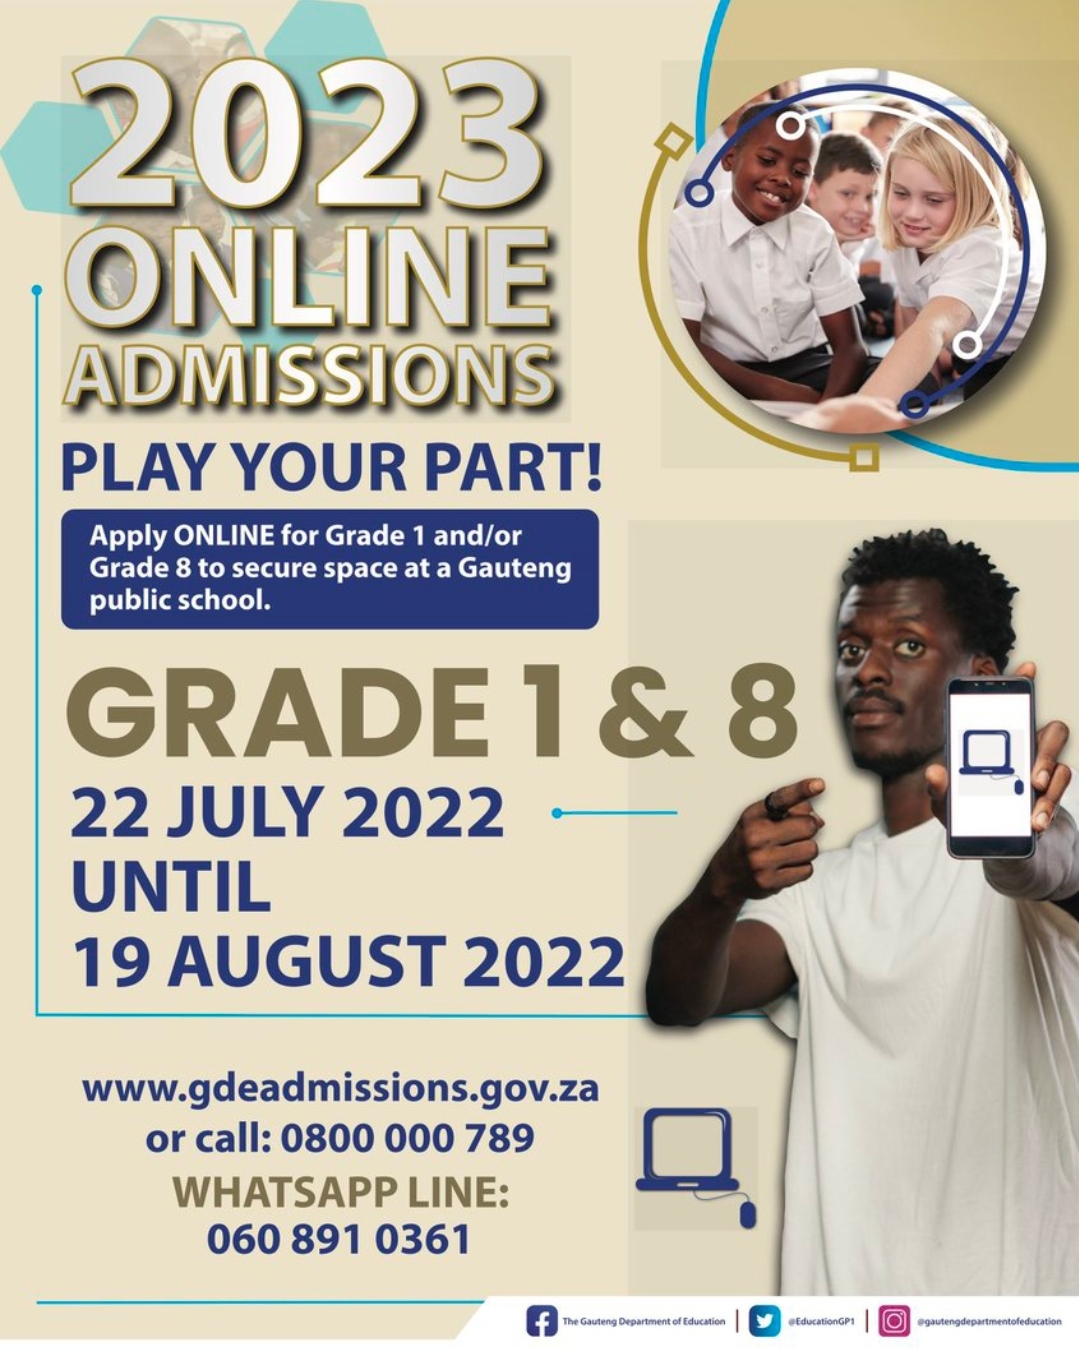 Gauteng online registration for Grades 1 and 8 opens